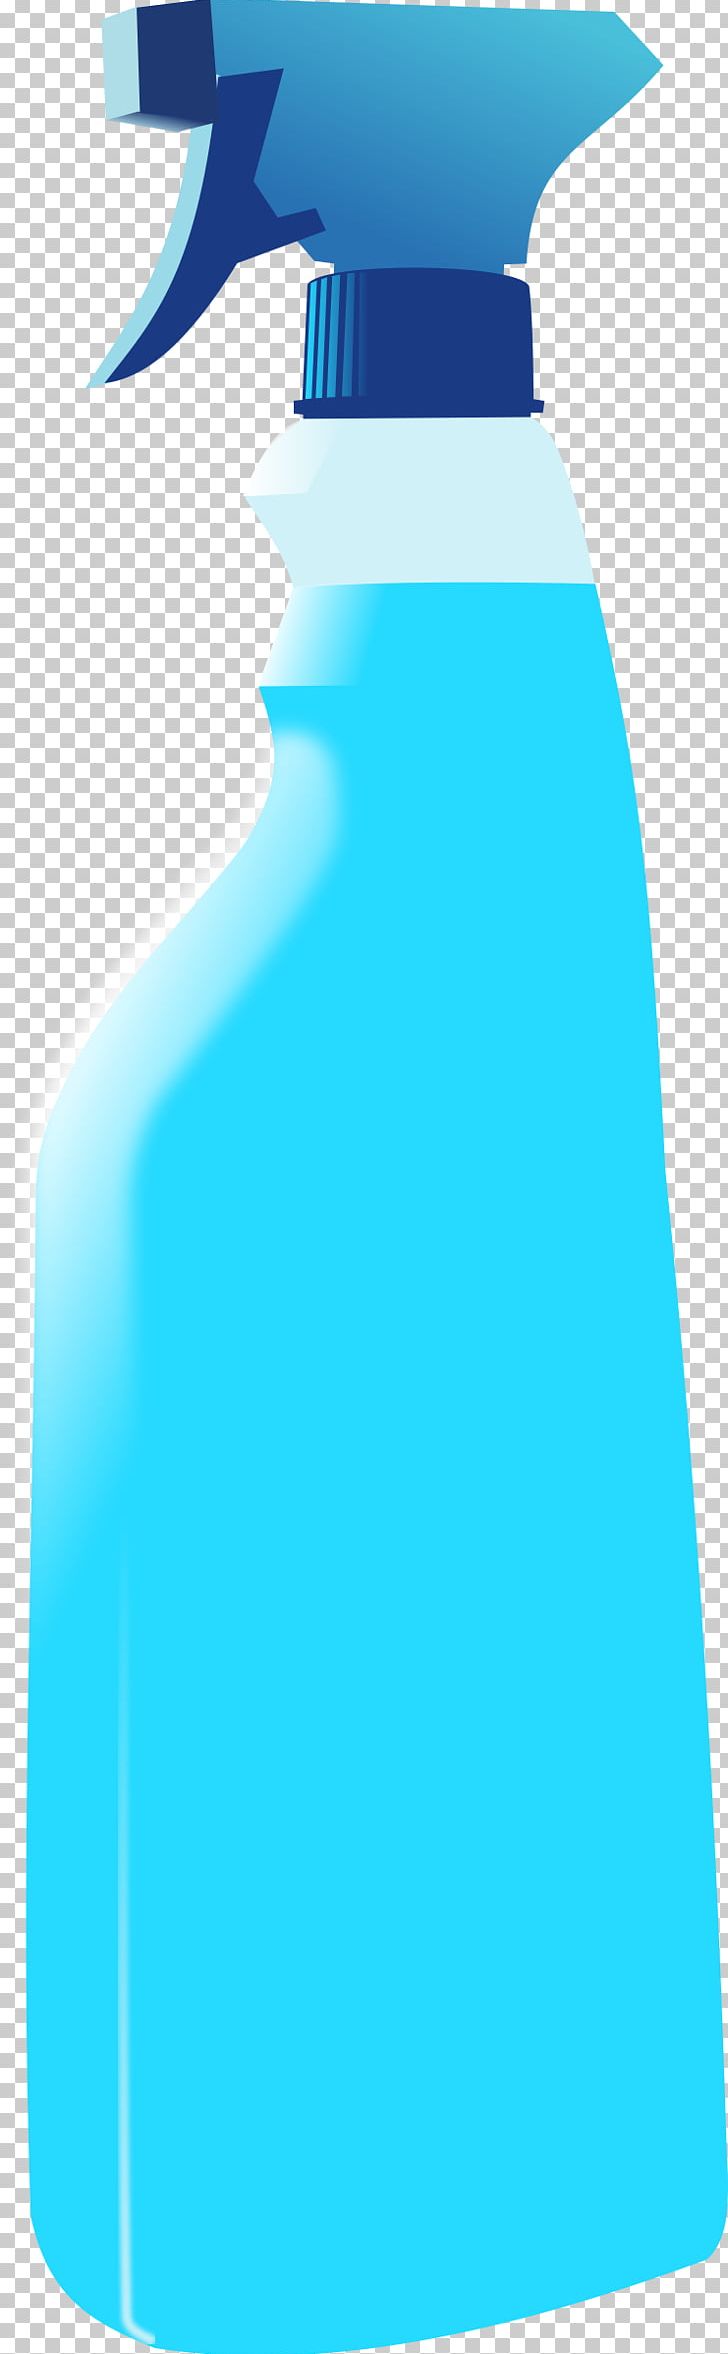 Spray Bottle Plastic Bottle PNG, Clipart, Aerosol Spray, Angle, Aqua, Azure, Blue Free PNG Download